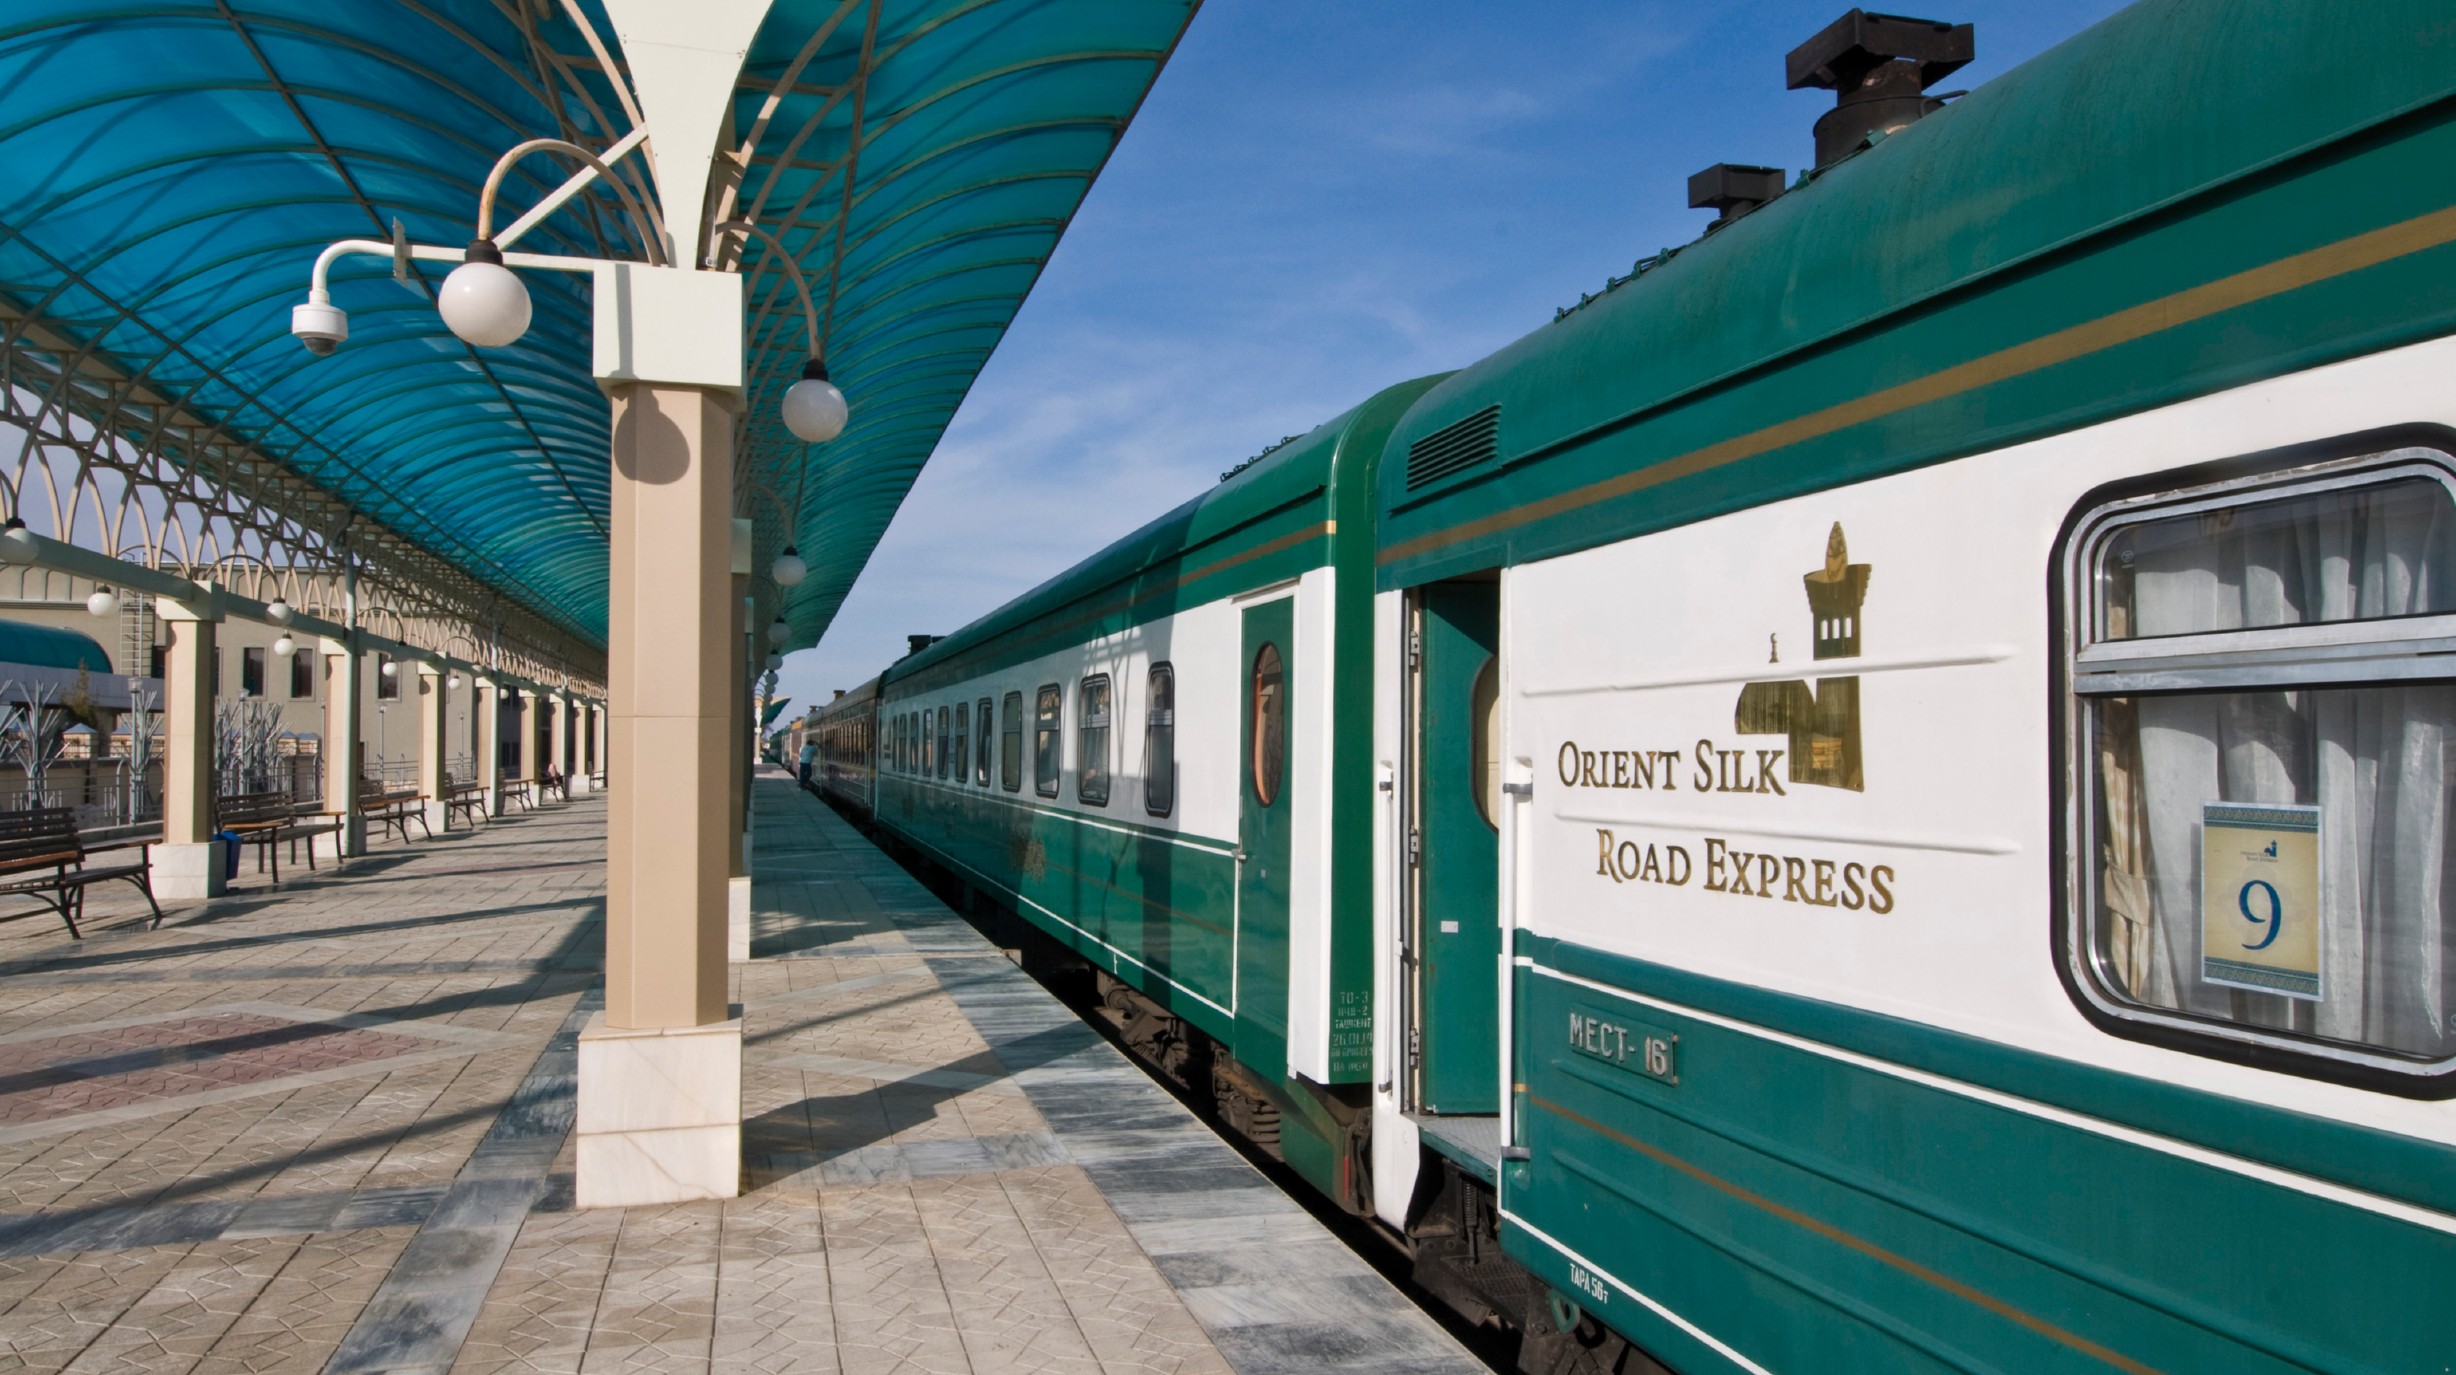 Orient Silk Road Express1 - Roland Jung - kopie